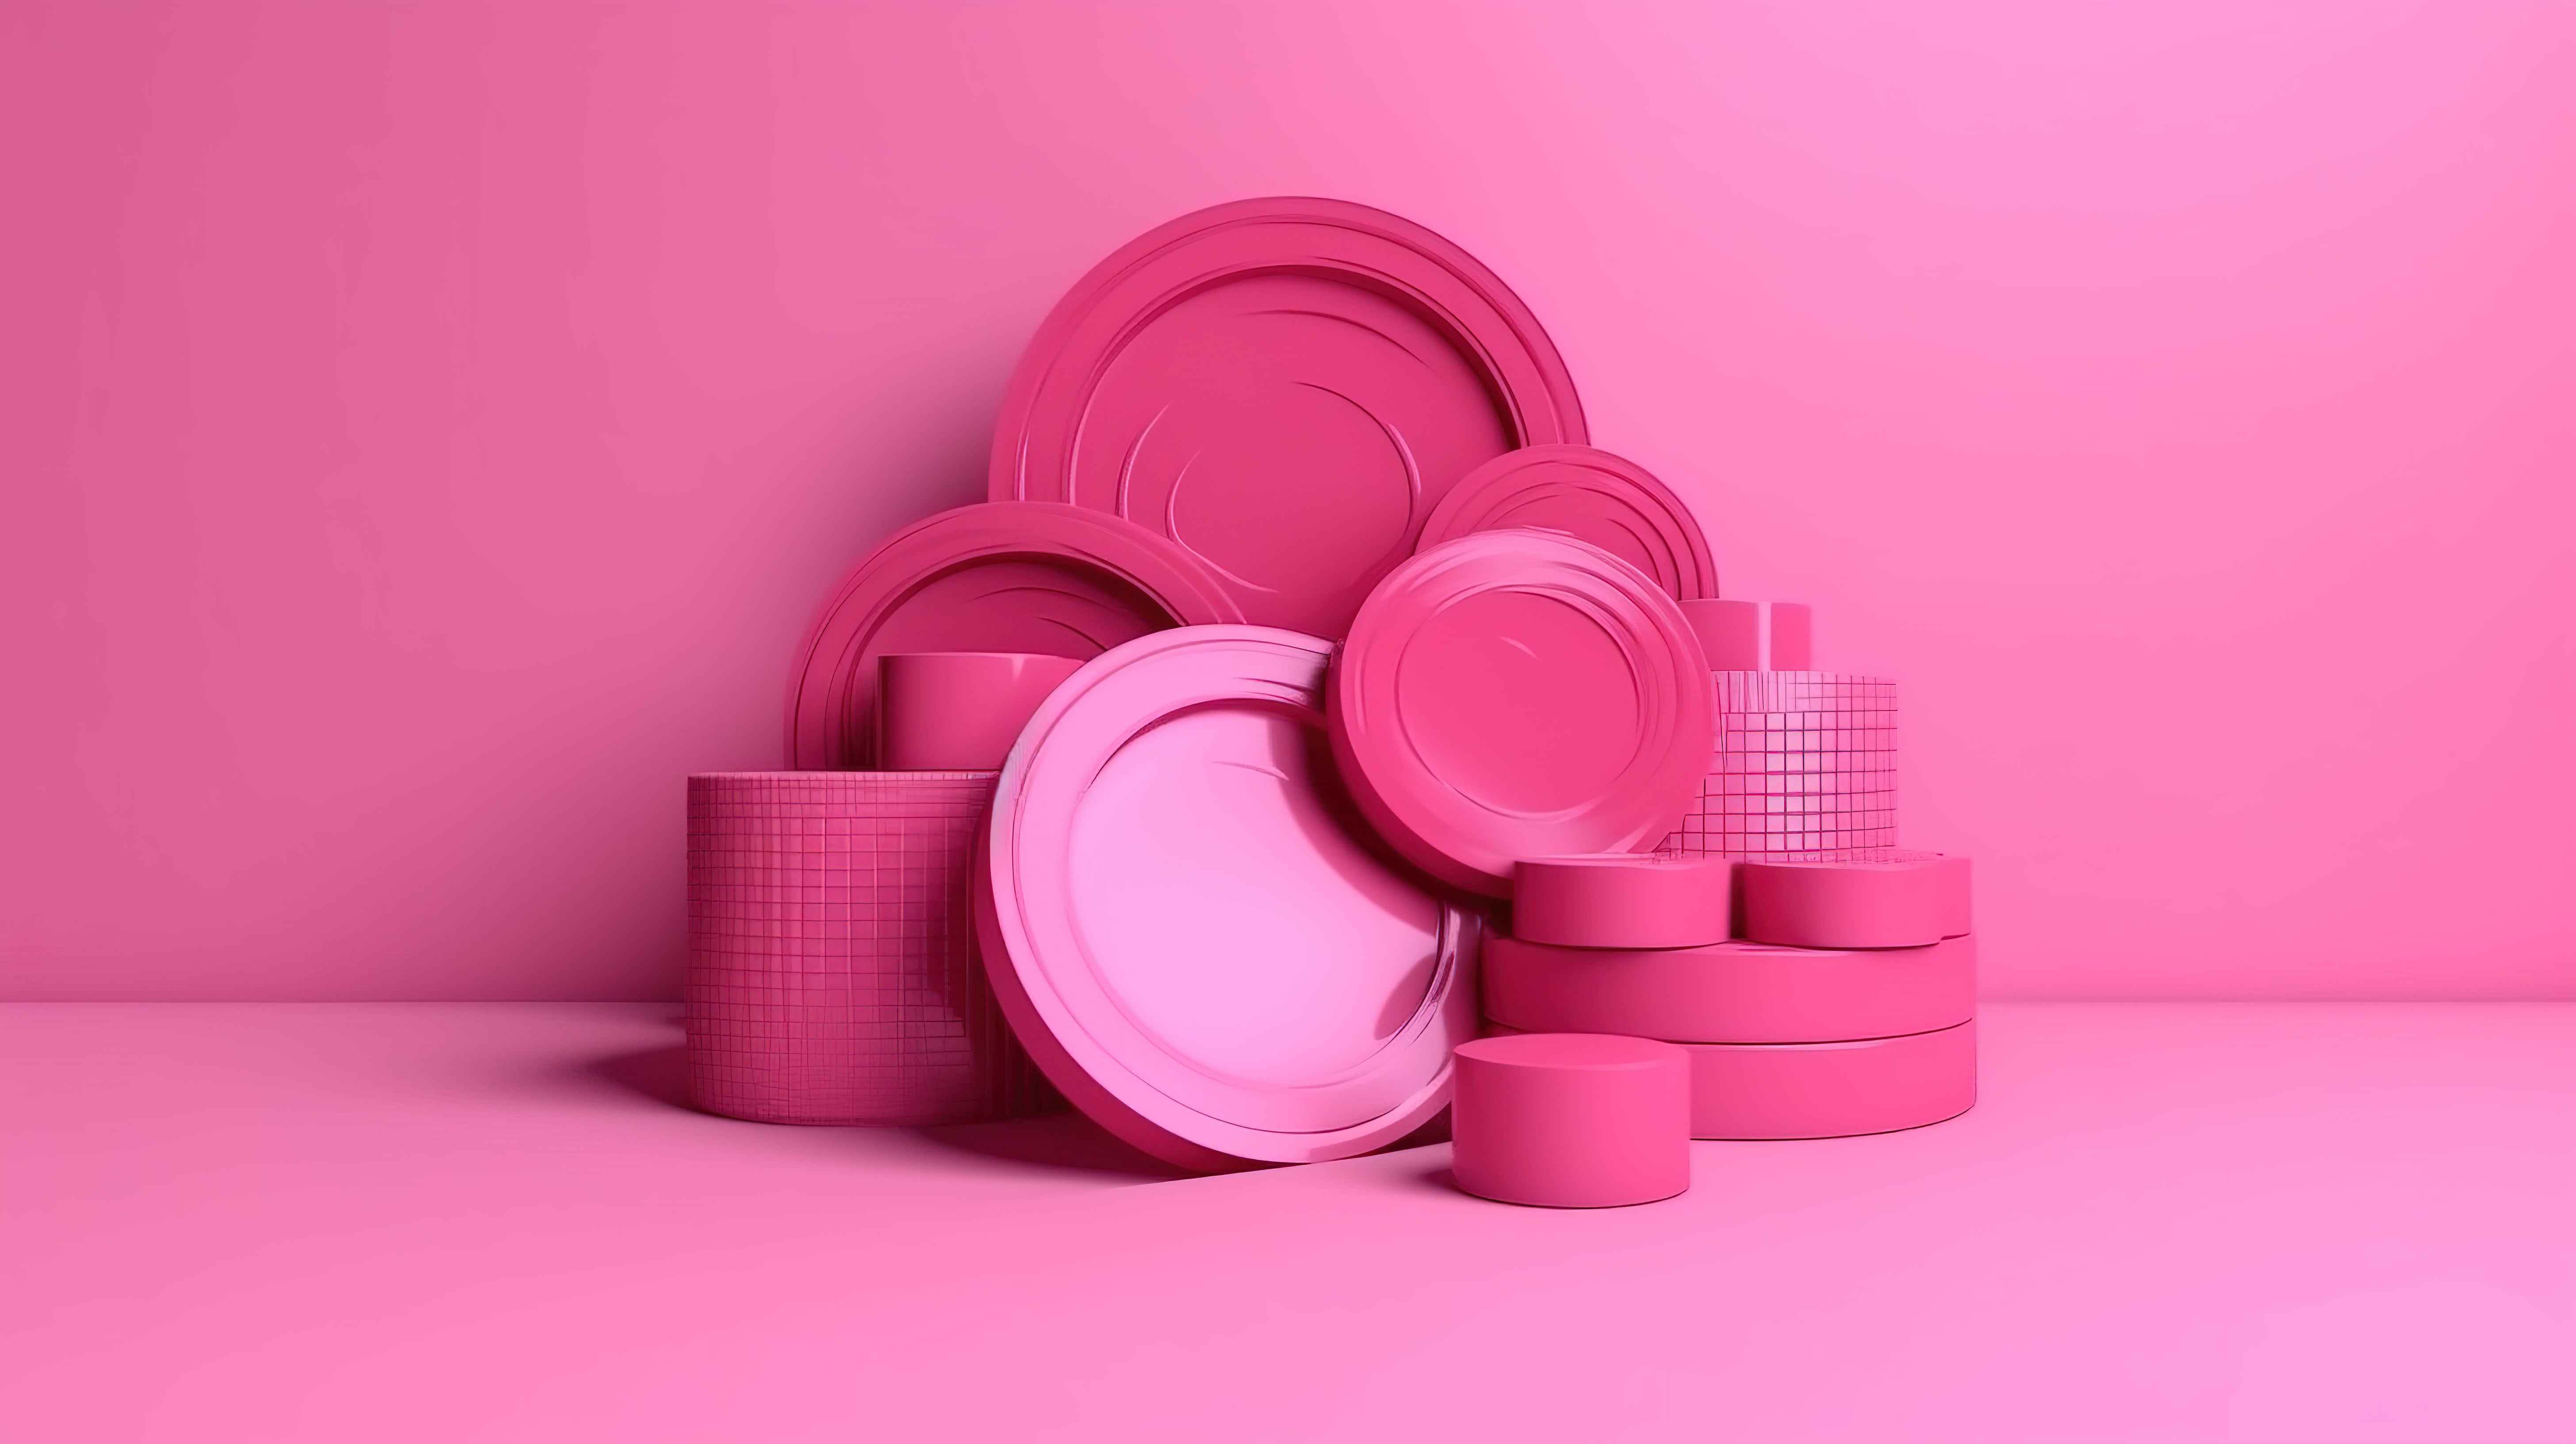 3D 渲染的粉红色折扣优惠券展示令人兴奋的交易和产品销售图片